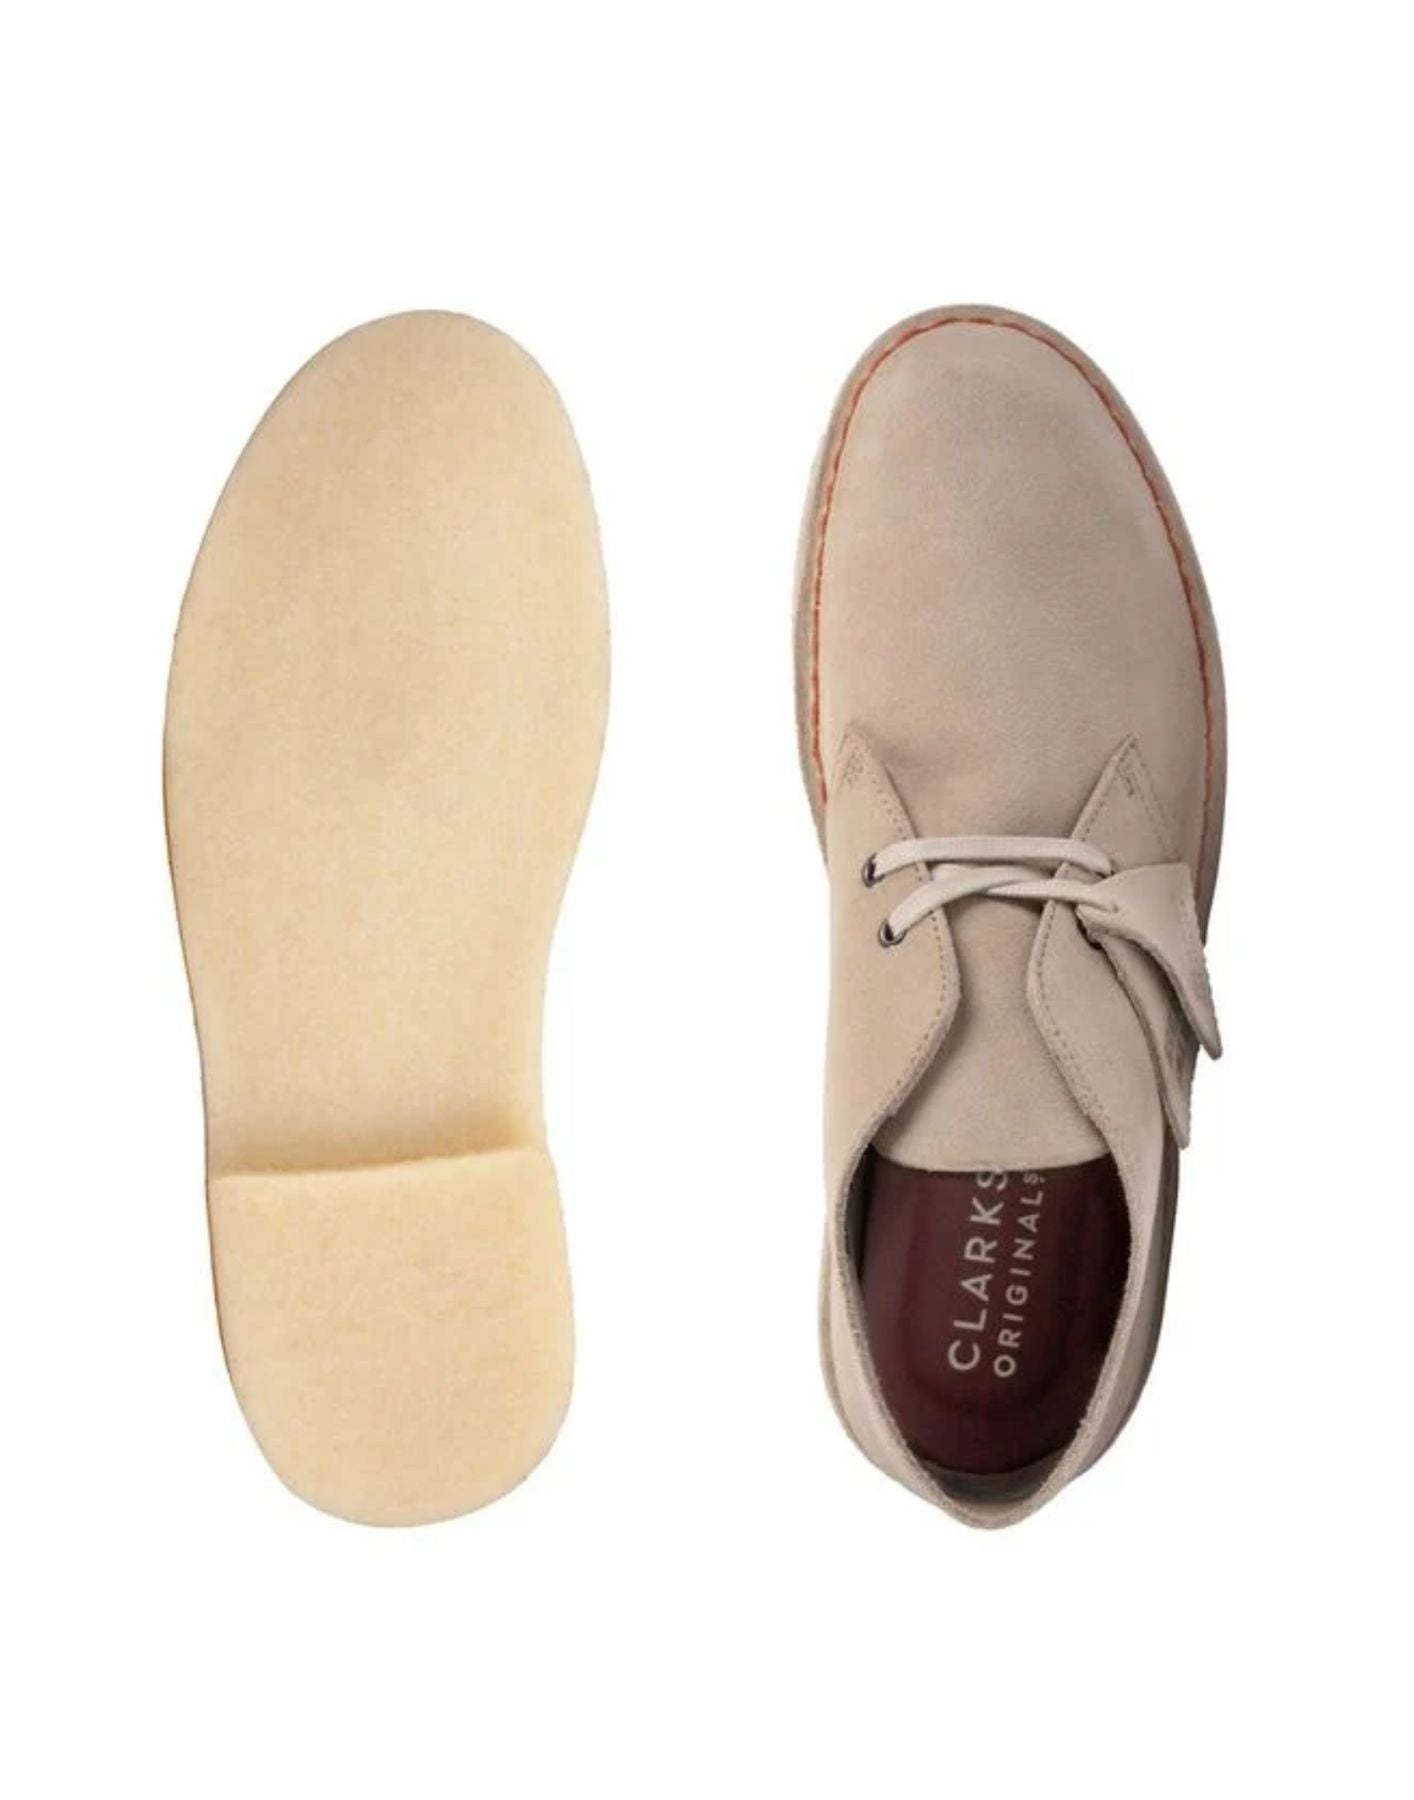 Chaussures pour homme DESERT BOOT SAND SUEDE Clarks Originals